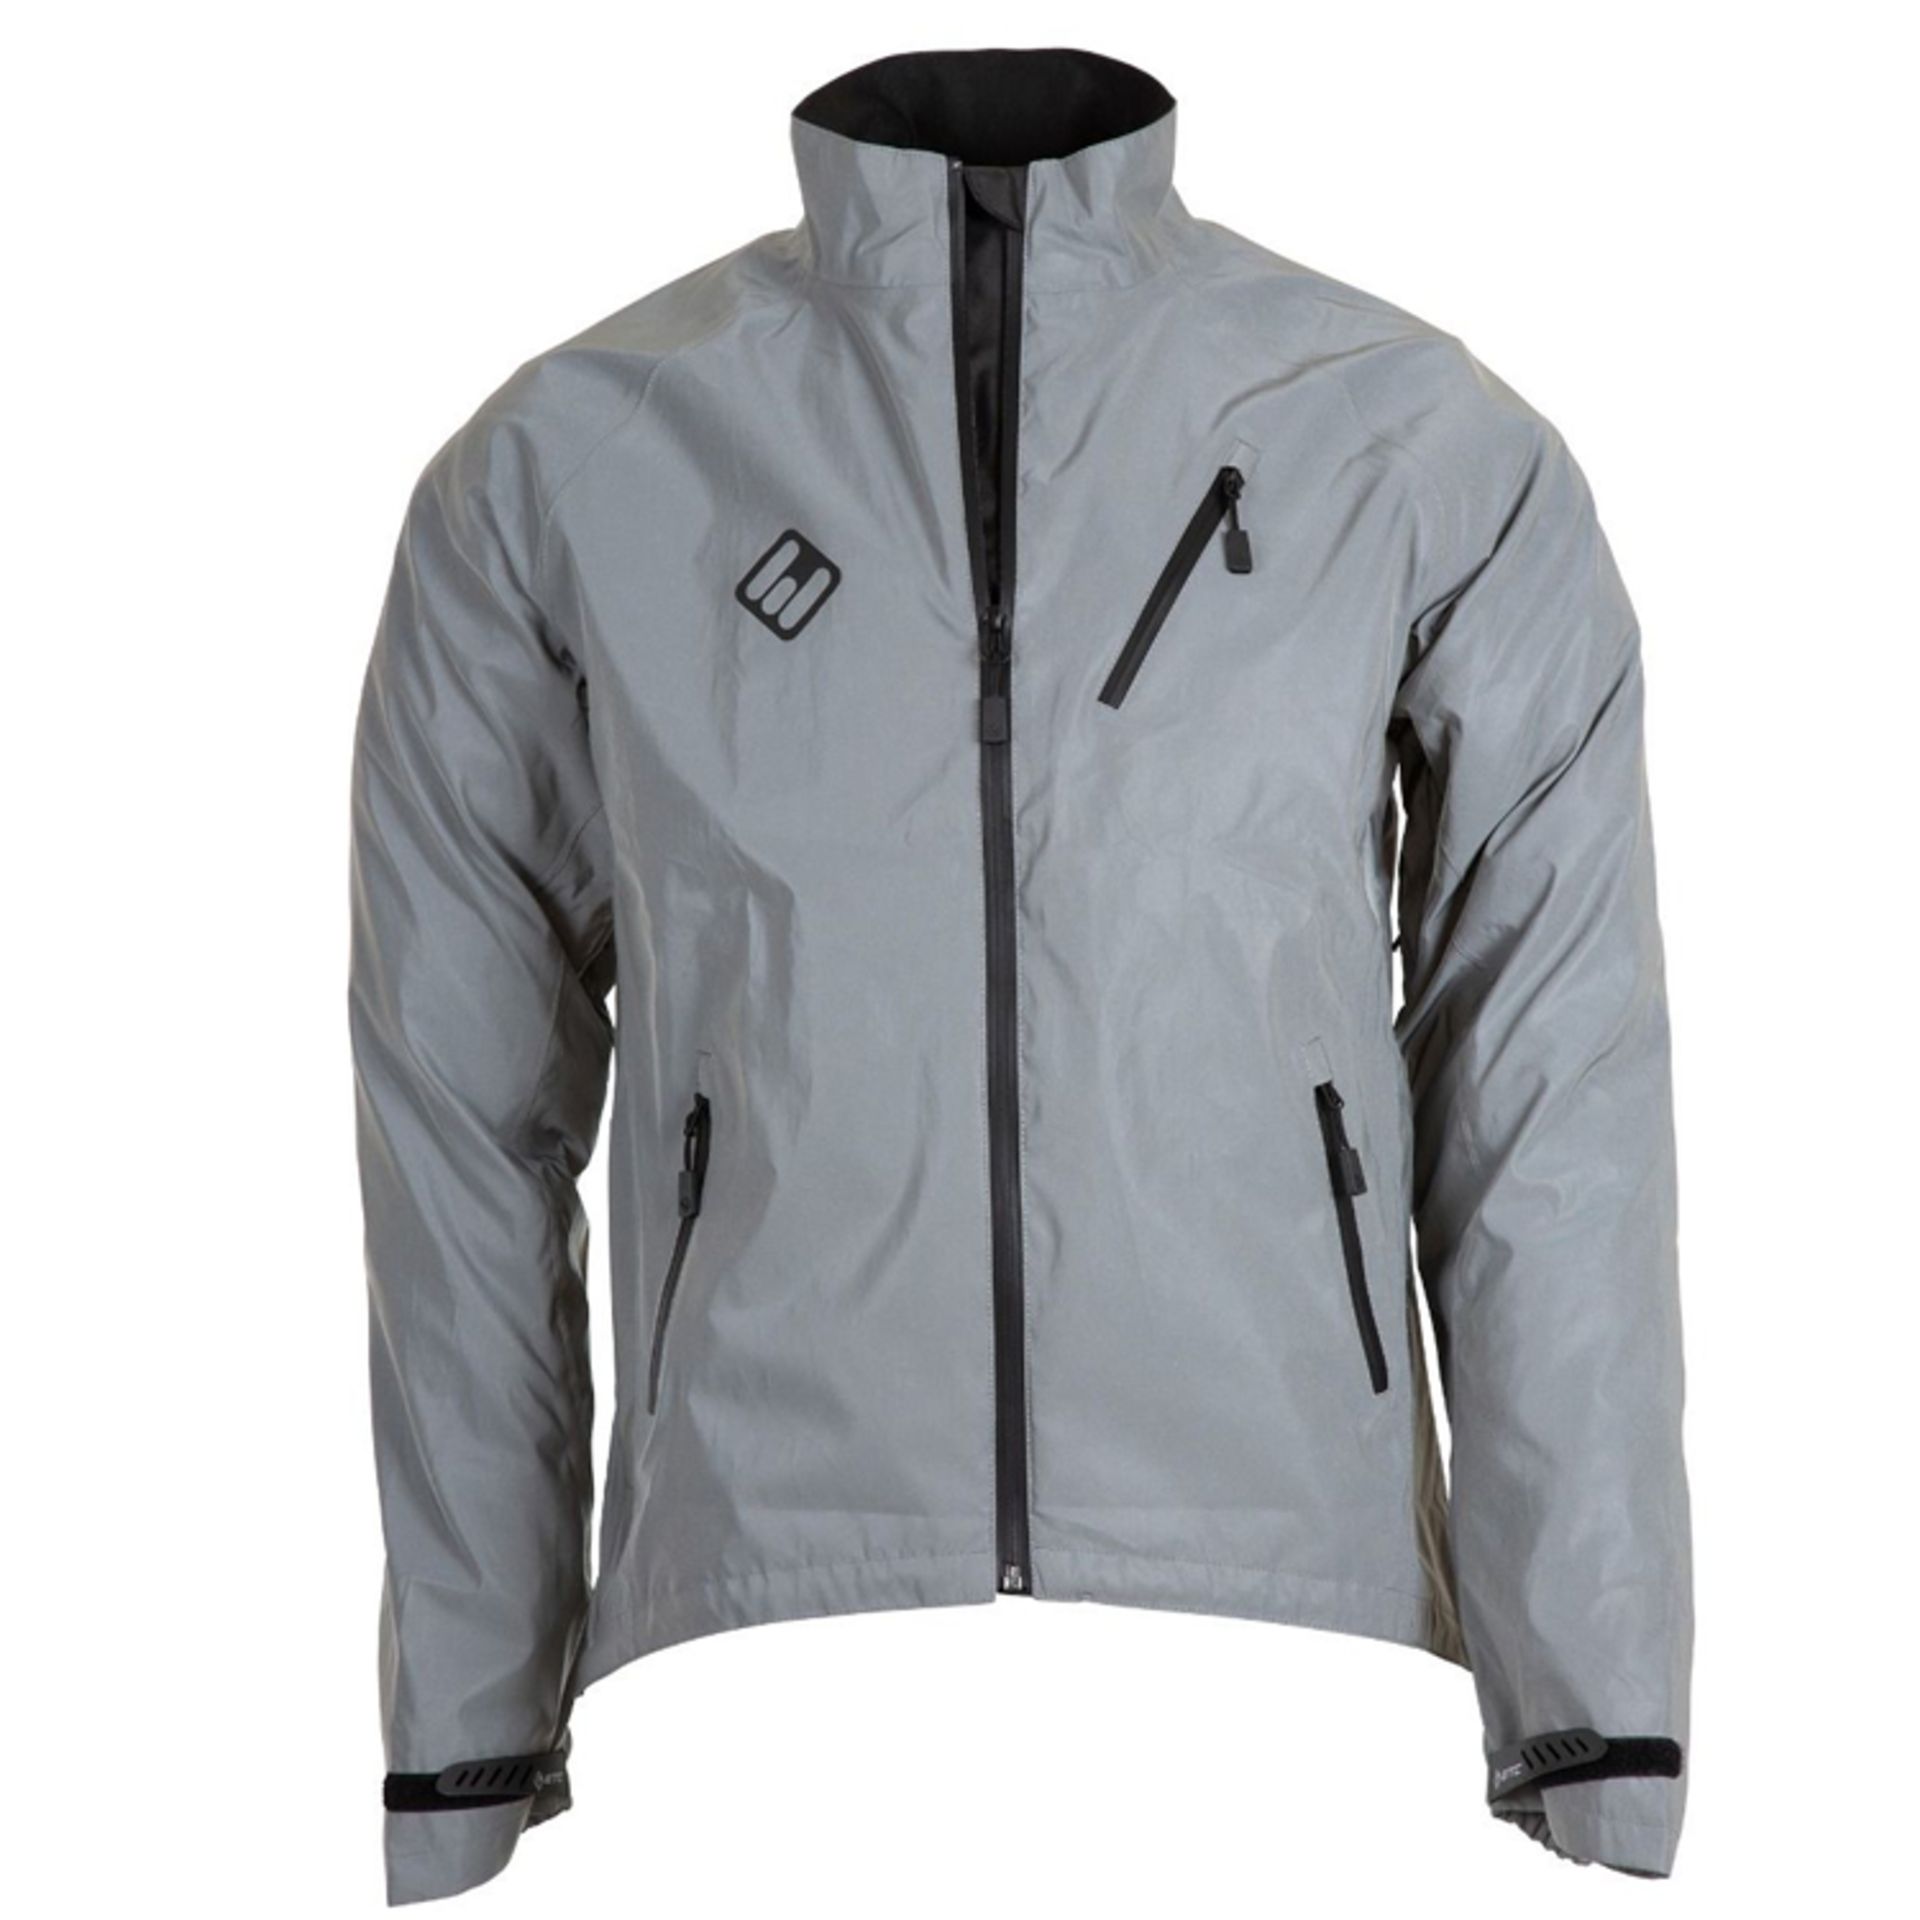 2 x ETC Men's Arid Cycling Rain Jacket – Size M –